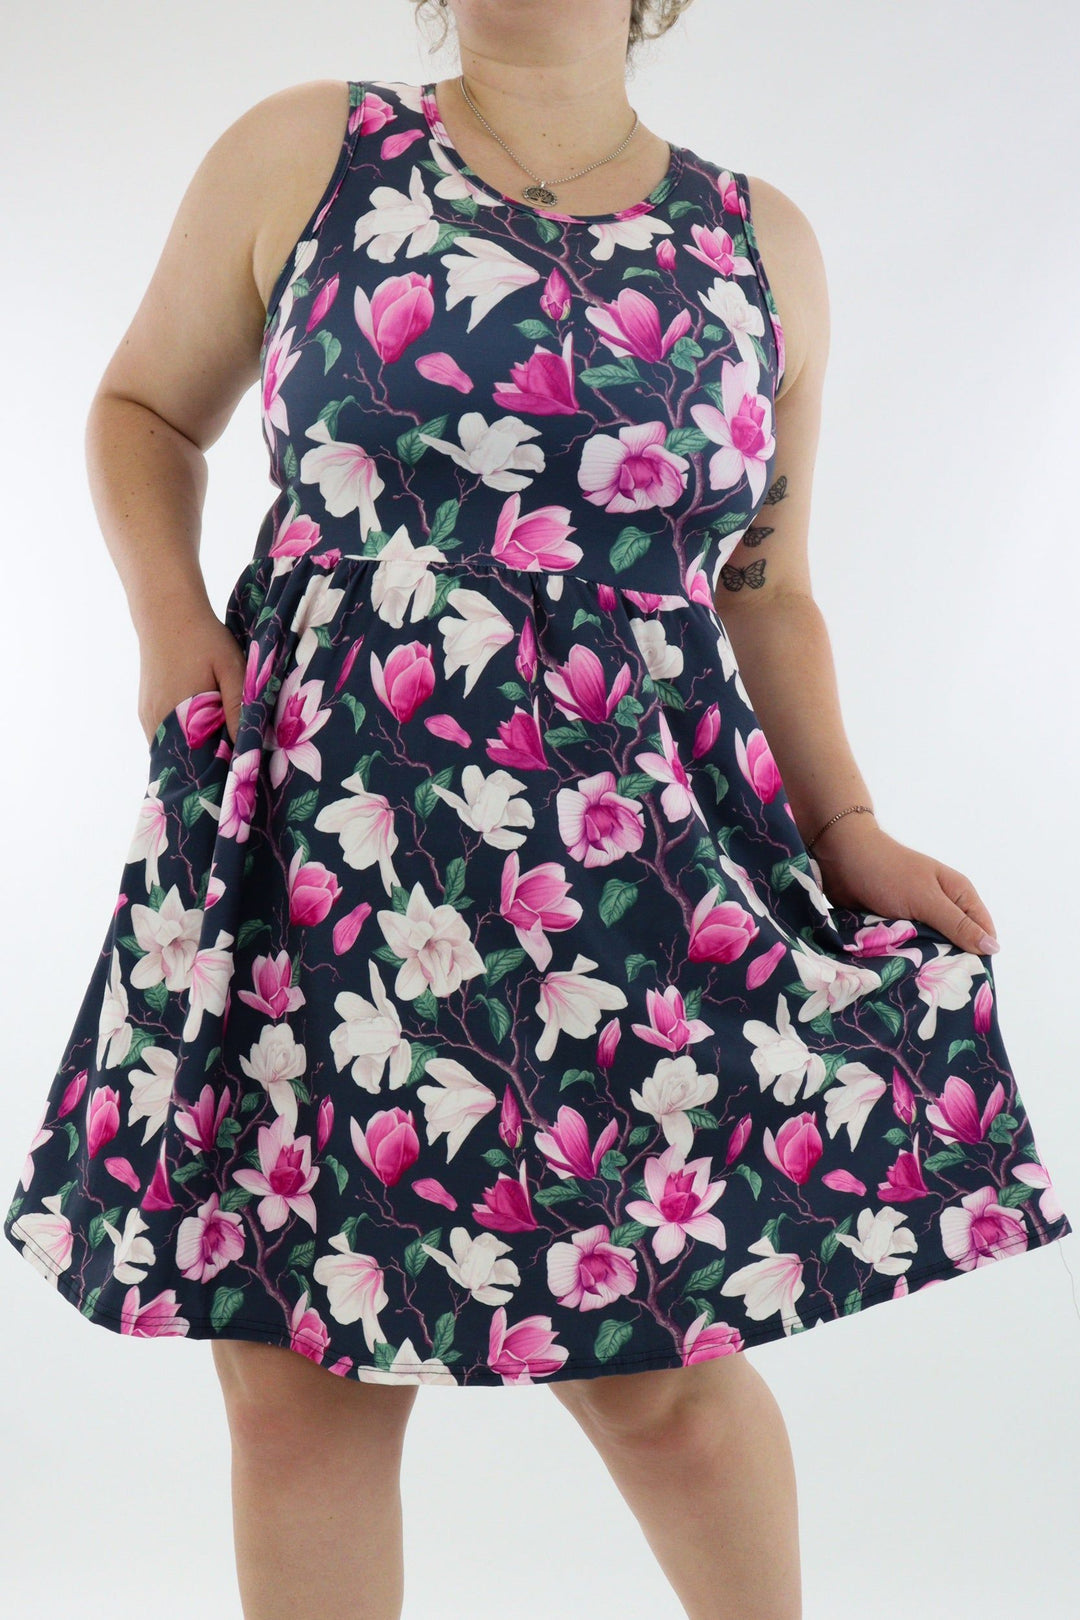 Vintage Magnolia - Sleeveless Skater Dress - Knee Length - Side Pockets - Pawlie